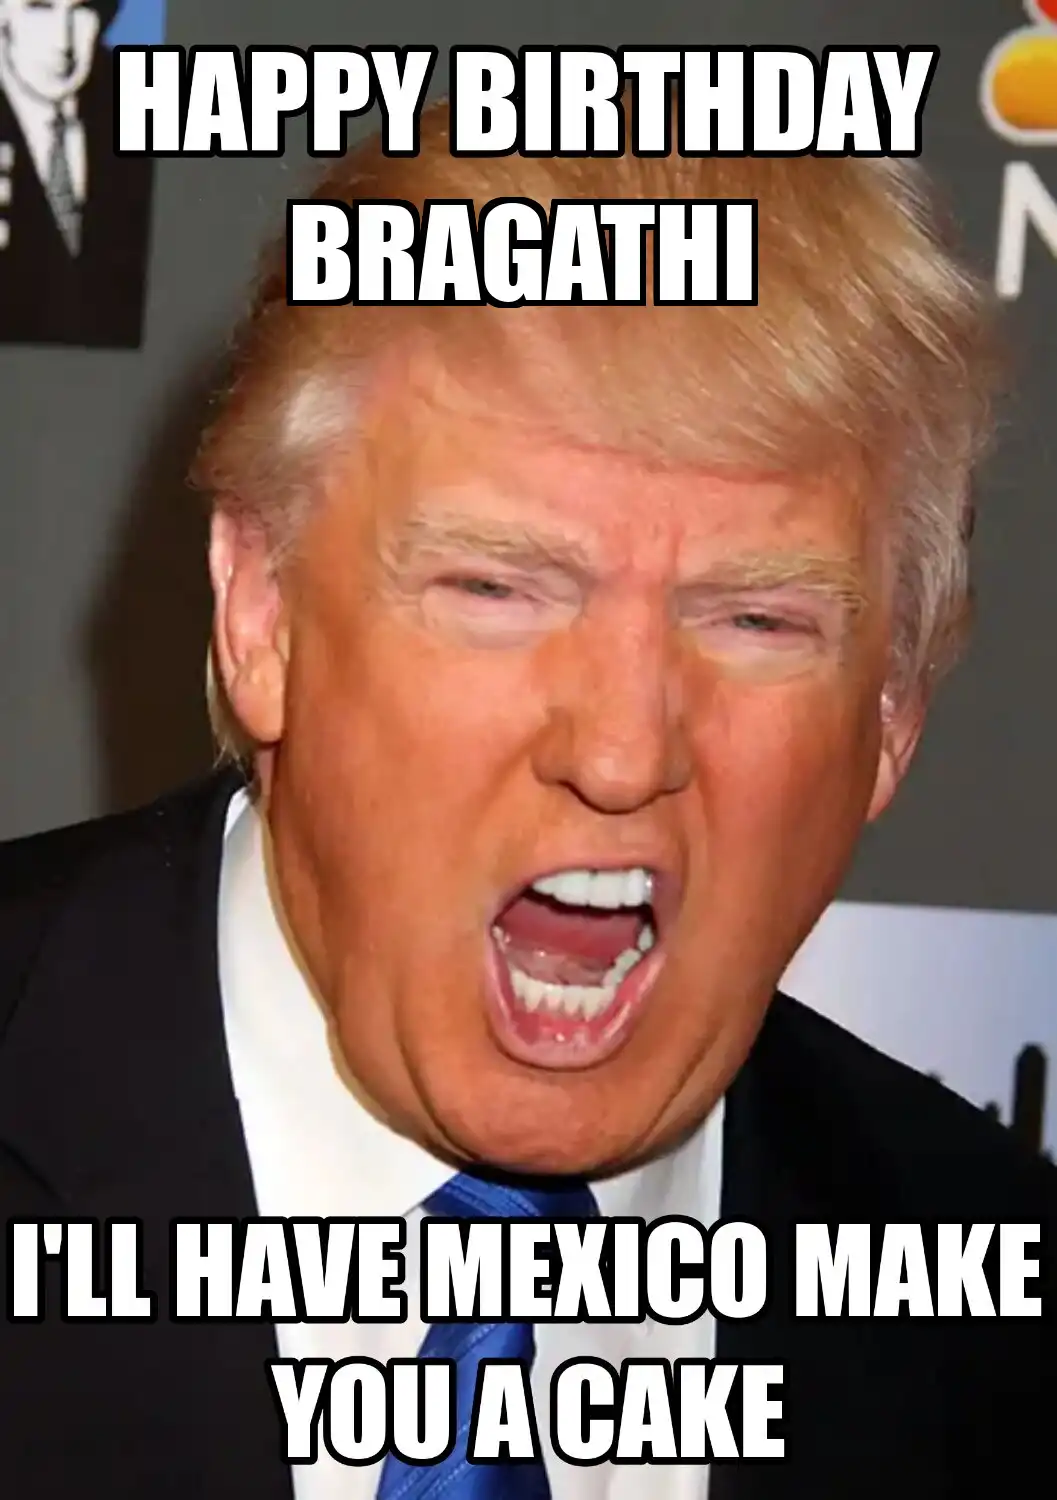 Happy Birthday Bragathi Mexico Make You A Cake Meme